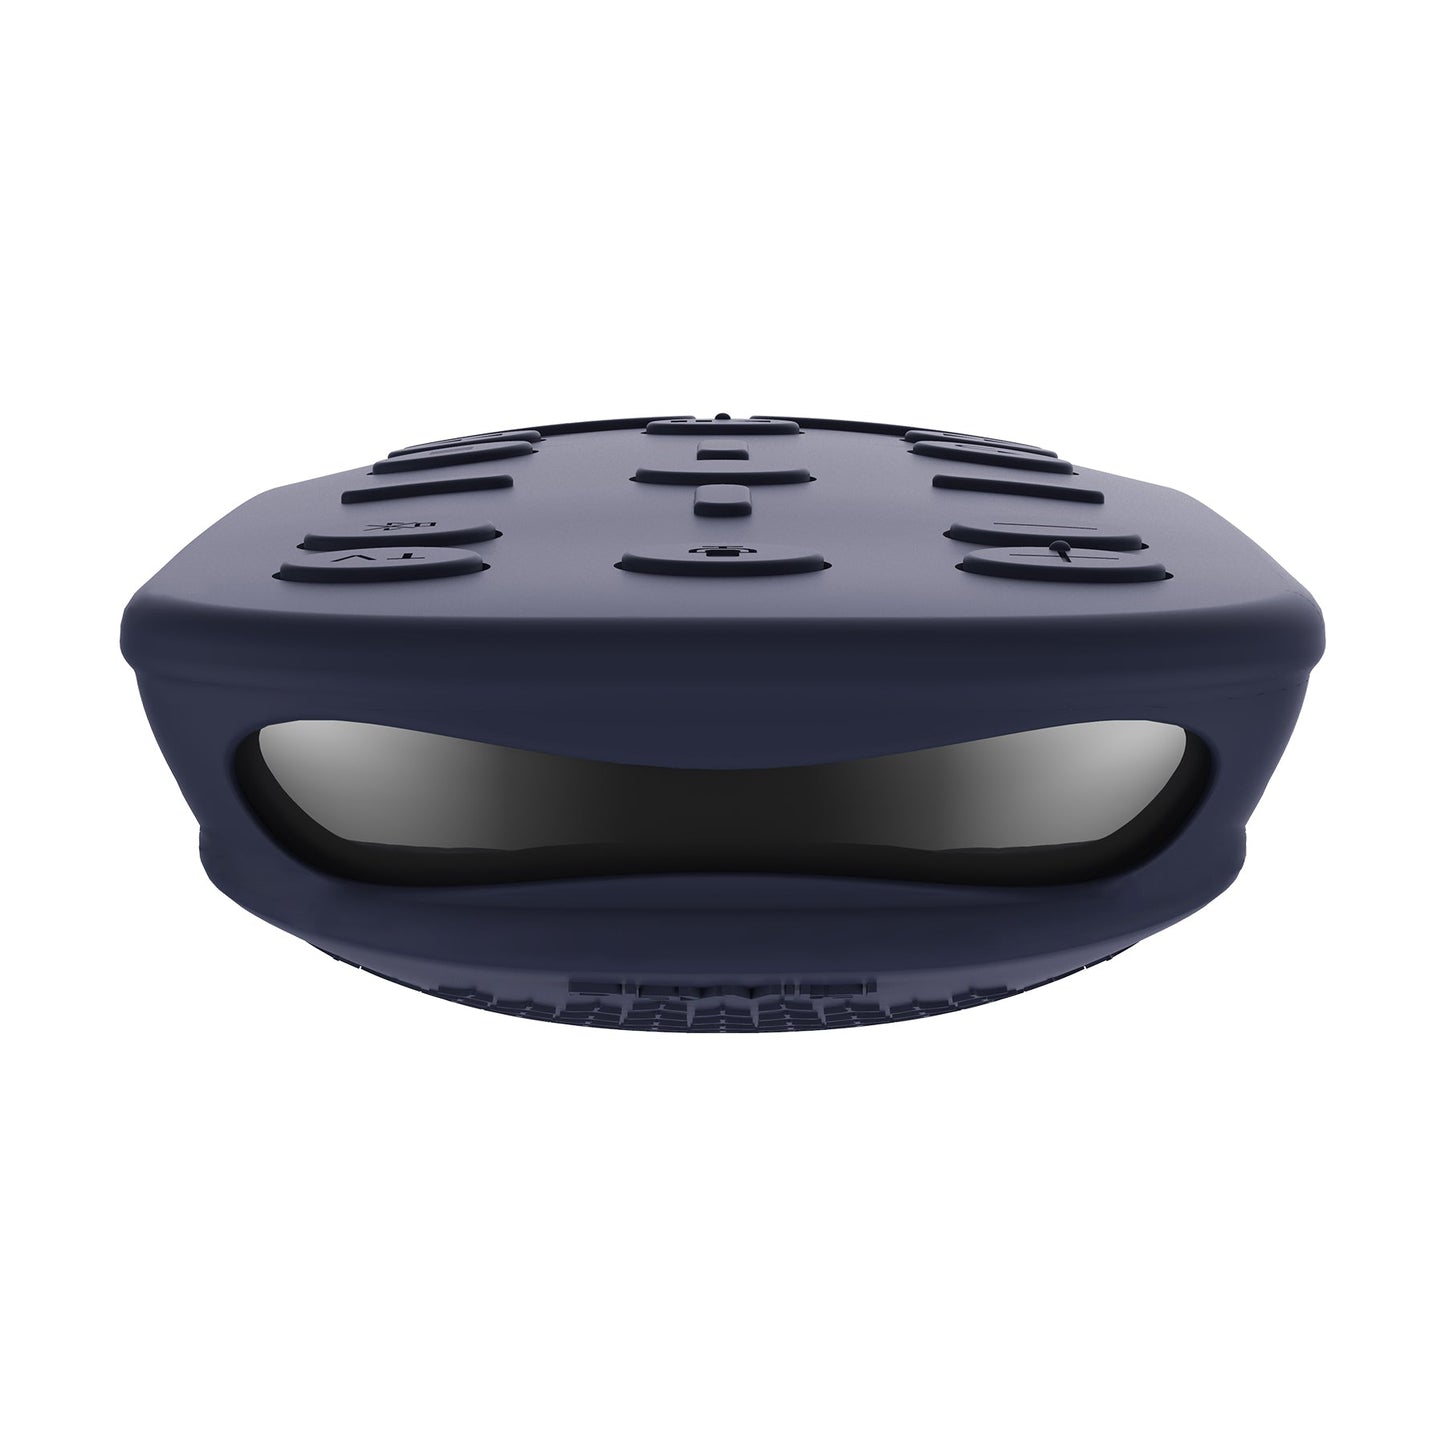 PlayVital Midnight Blue Silicone Protective Remote Case for PS5 Media Remote Cover, Ergonomic Design Full Body Protector Skin for PS5 Remote Control - PFPJ038 PlayVital